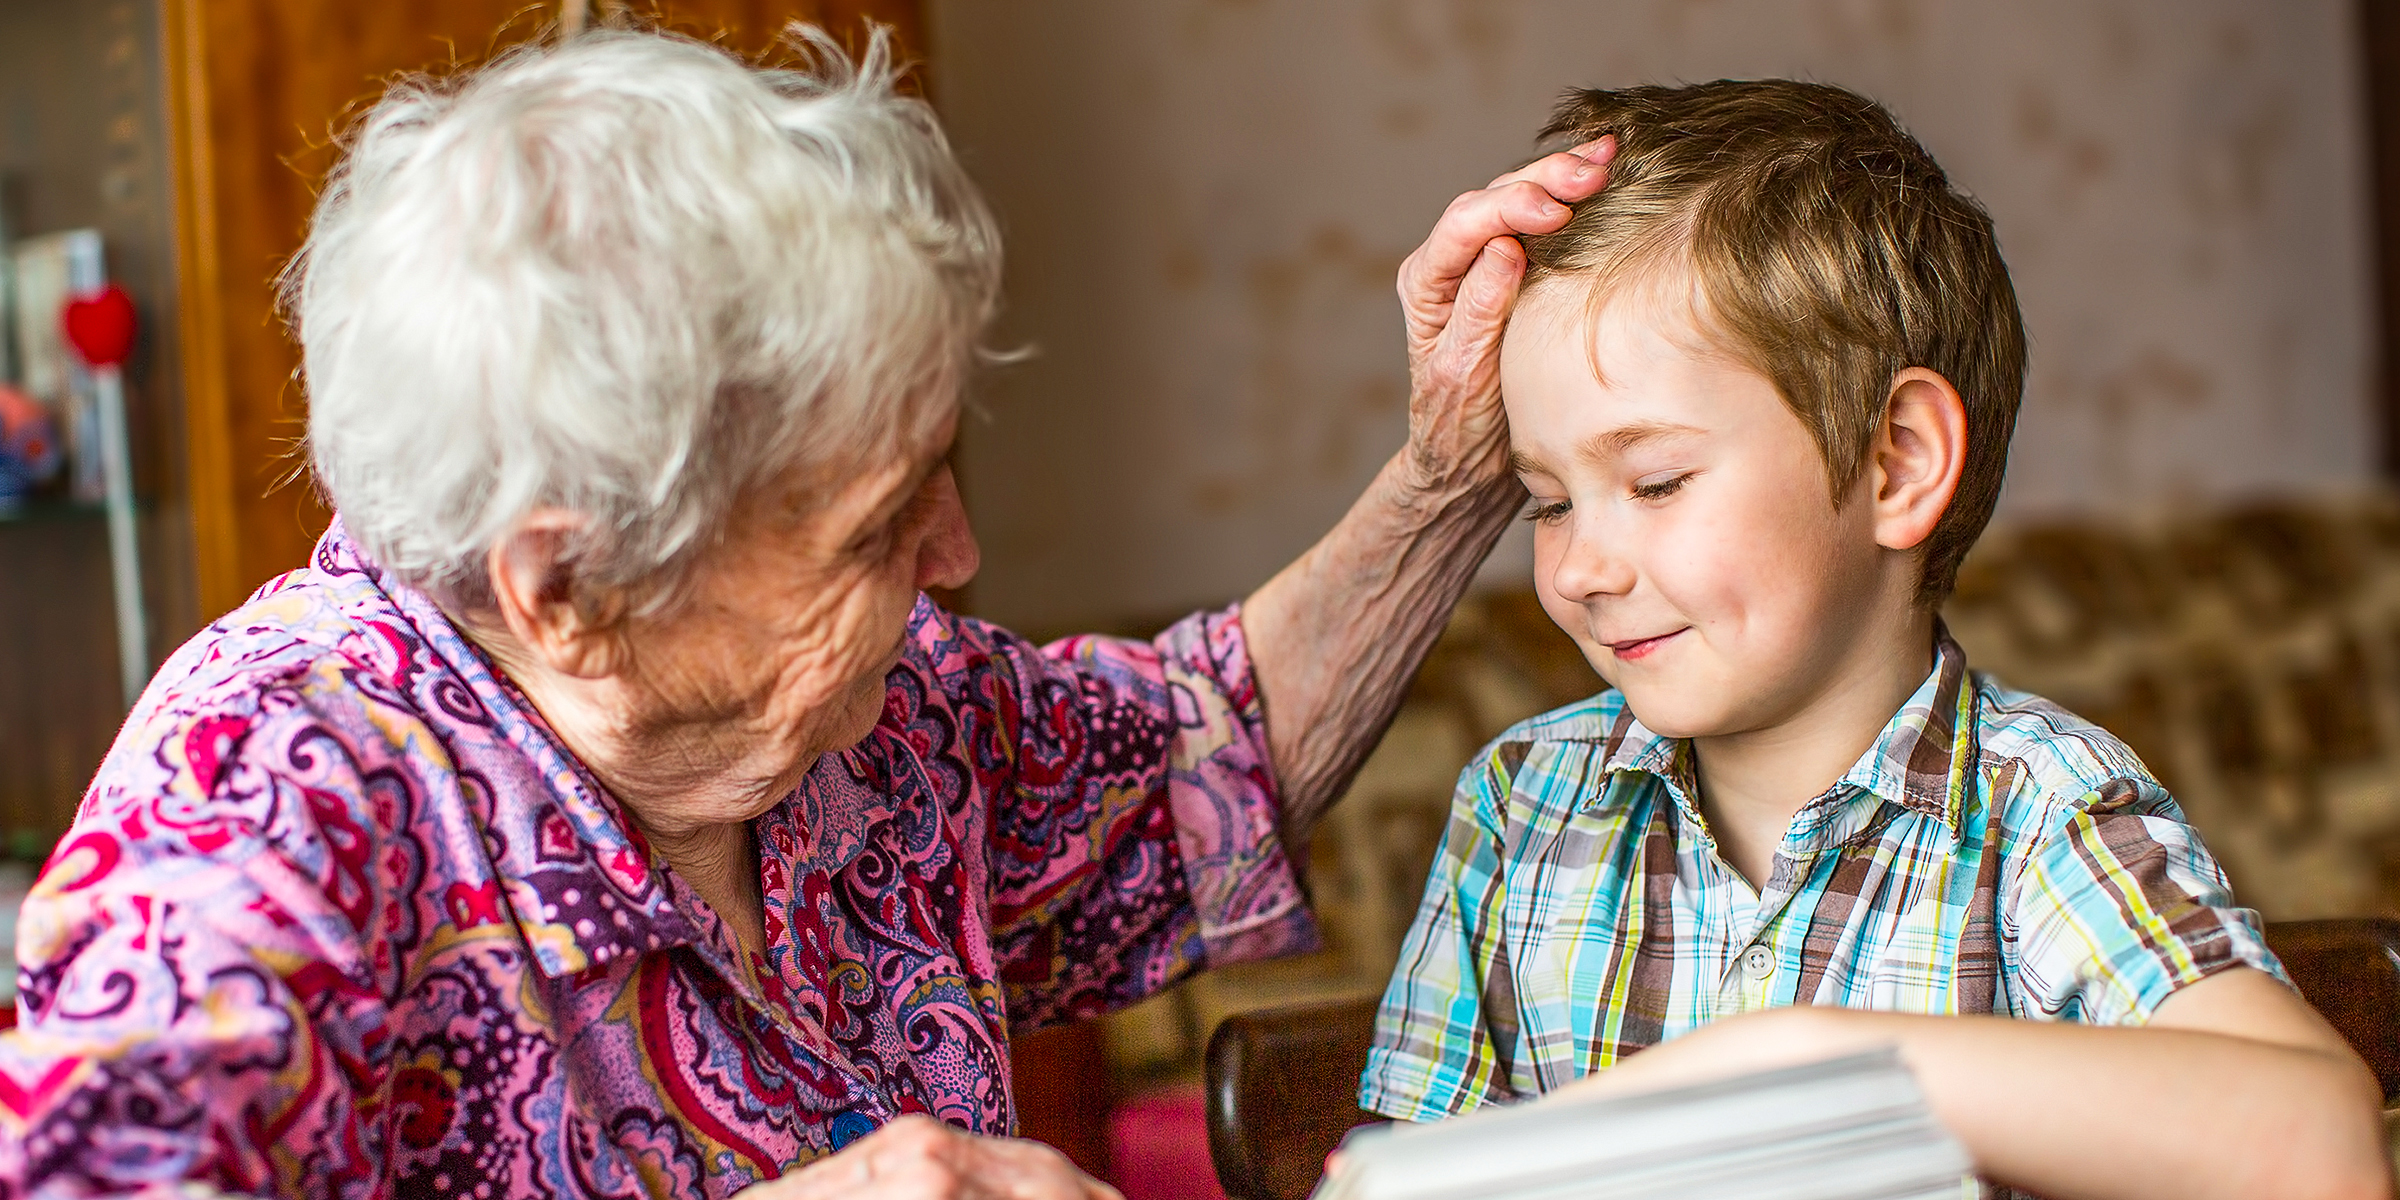 Grandma and her grandson | Source: Shutterstock